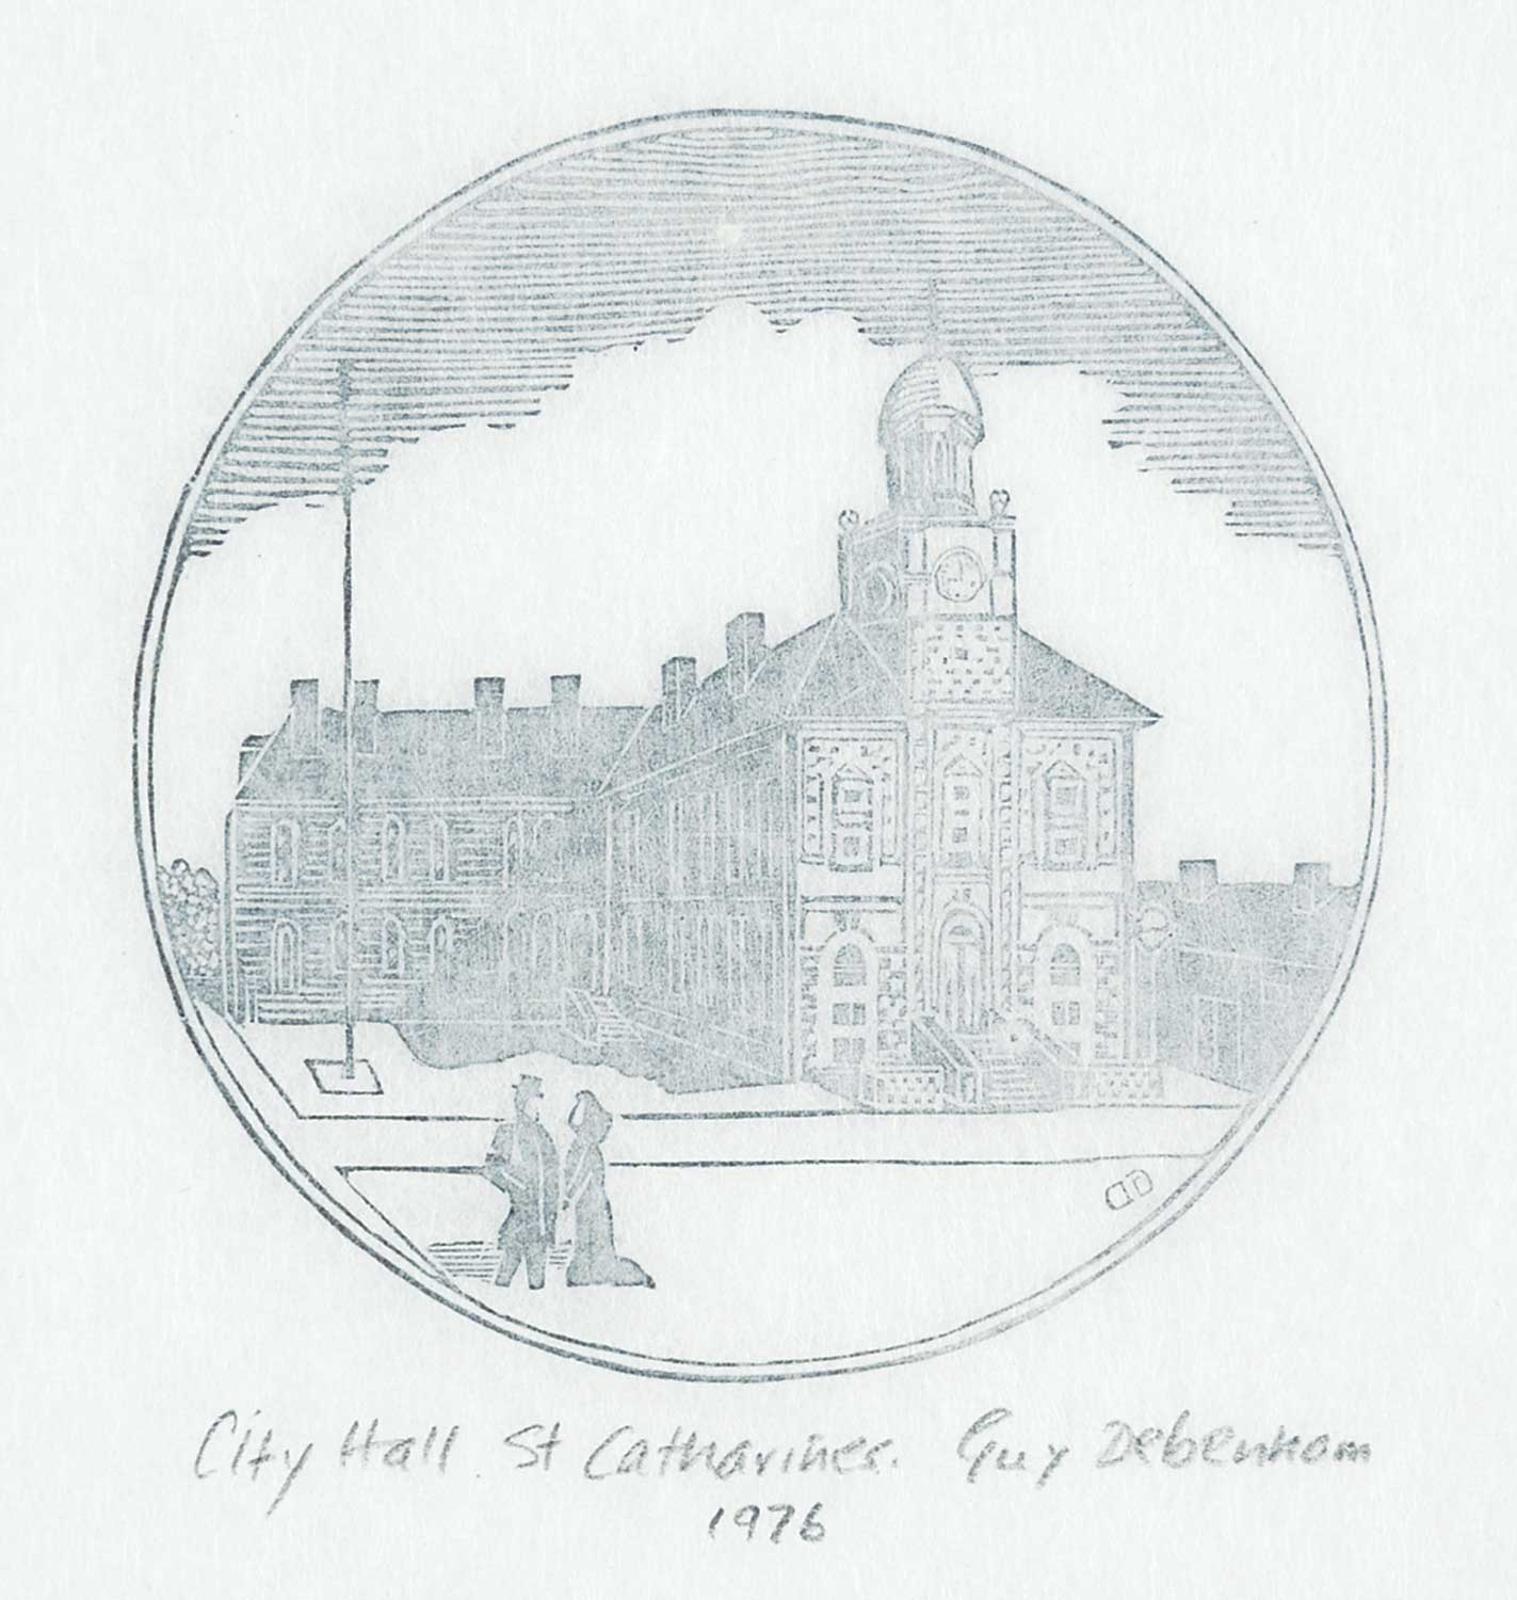 Guy Debenham - City Hall St. Catherines